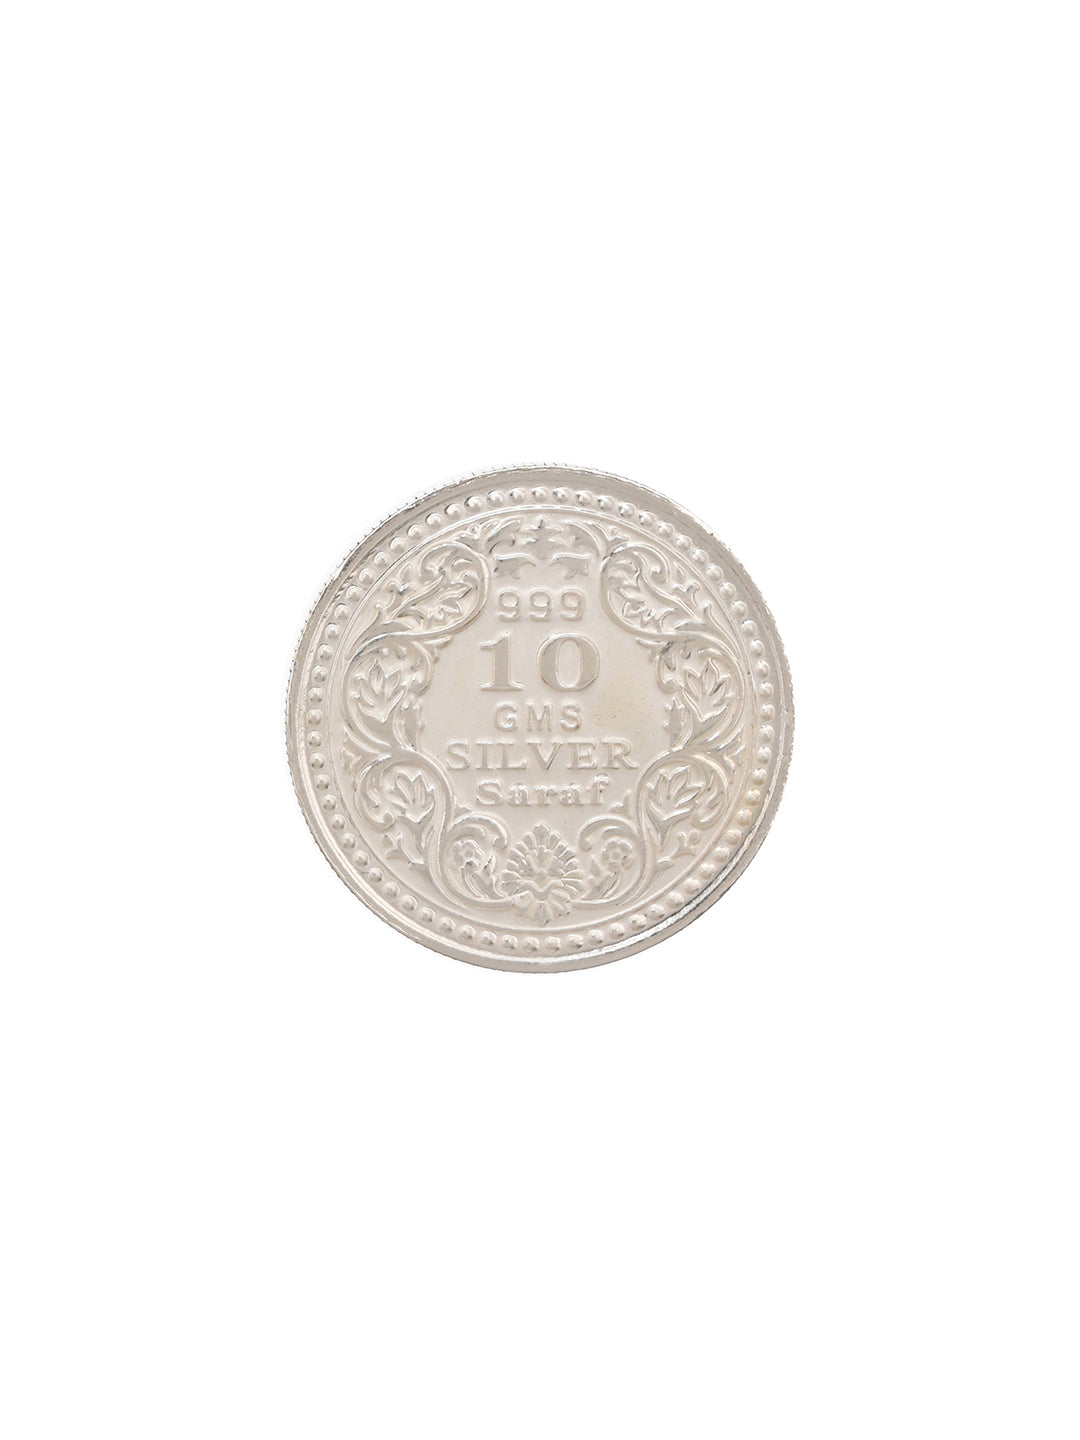 Tirupati Balaji 10 gram 999 Round Silver Coin